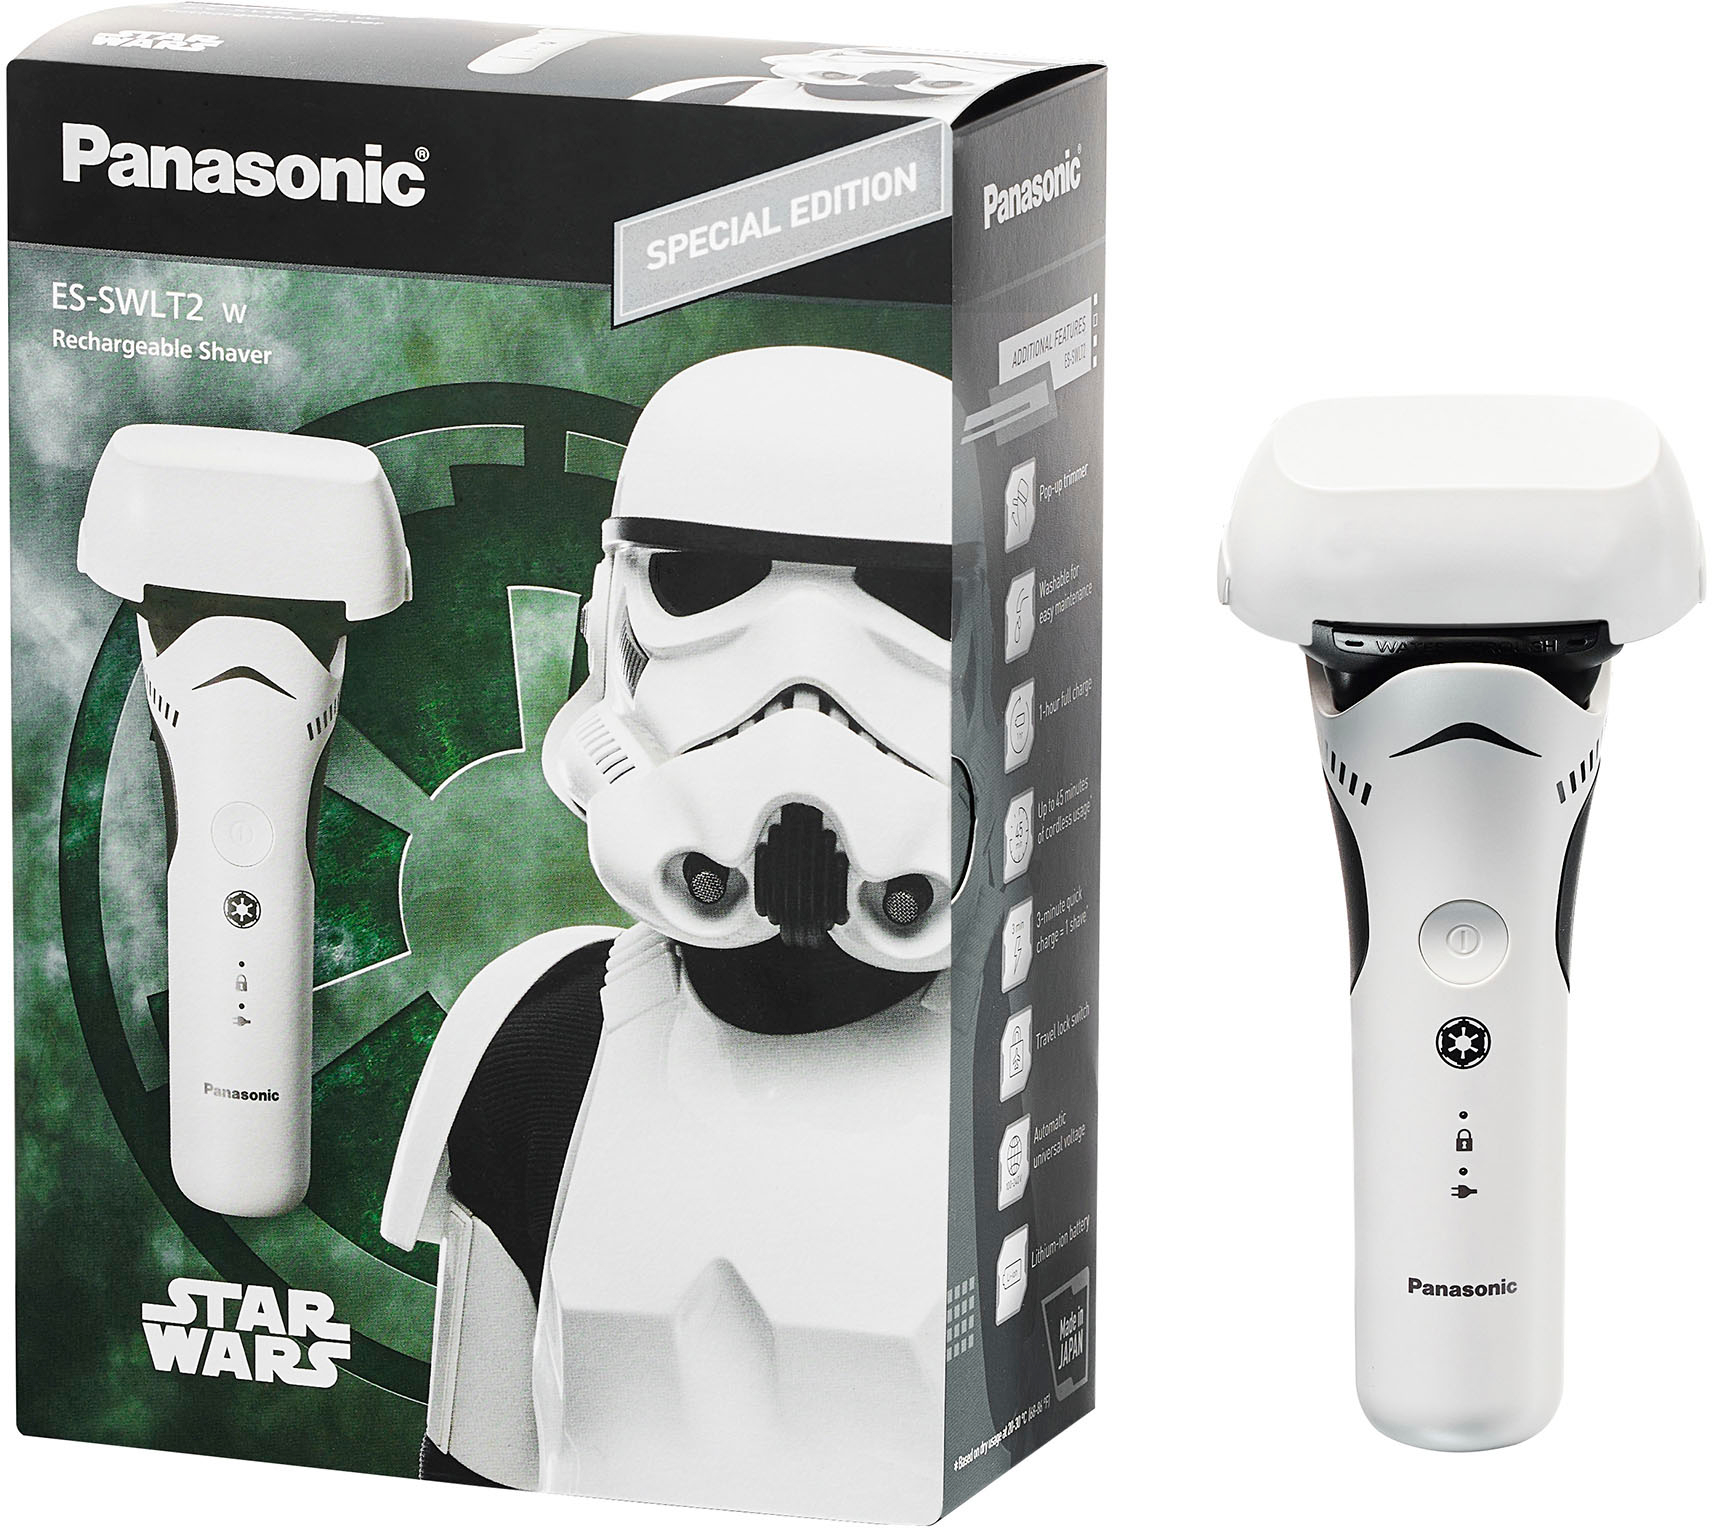 Panasonic Stormtrooper Wet/Dry Electric Shaver $75